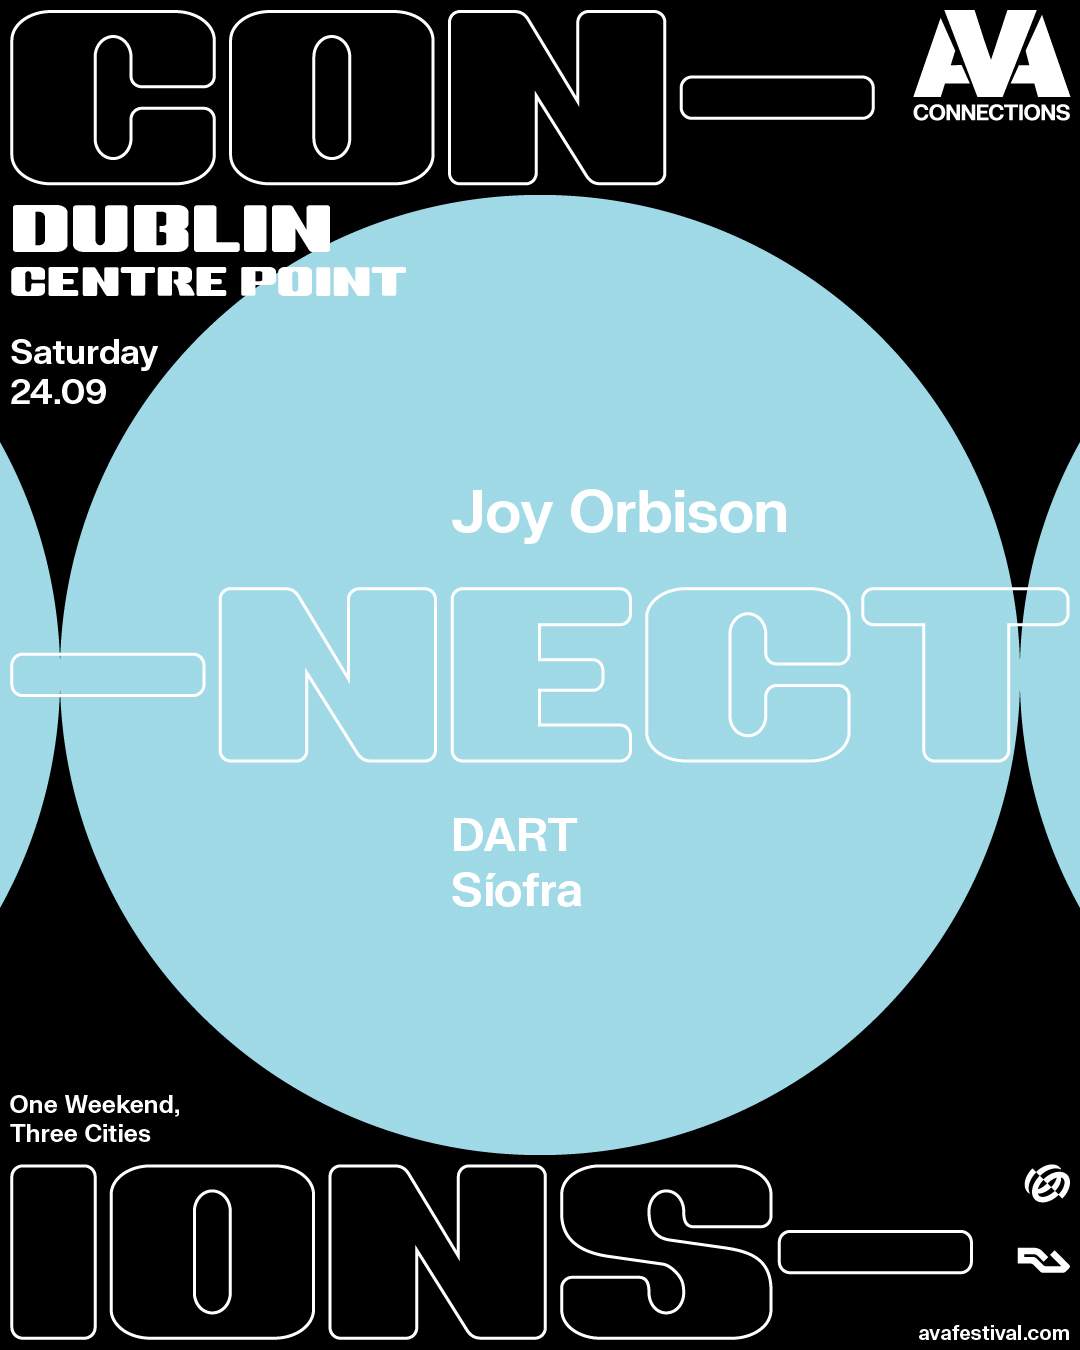 AVA Connections - Dublin: Joy Orbison, DART, Síofra - Página frontal